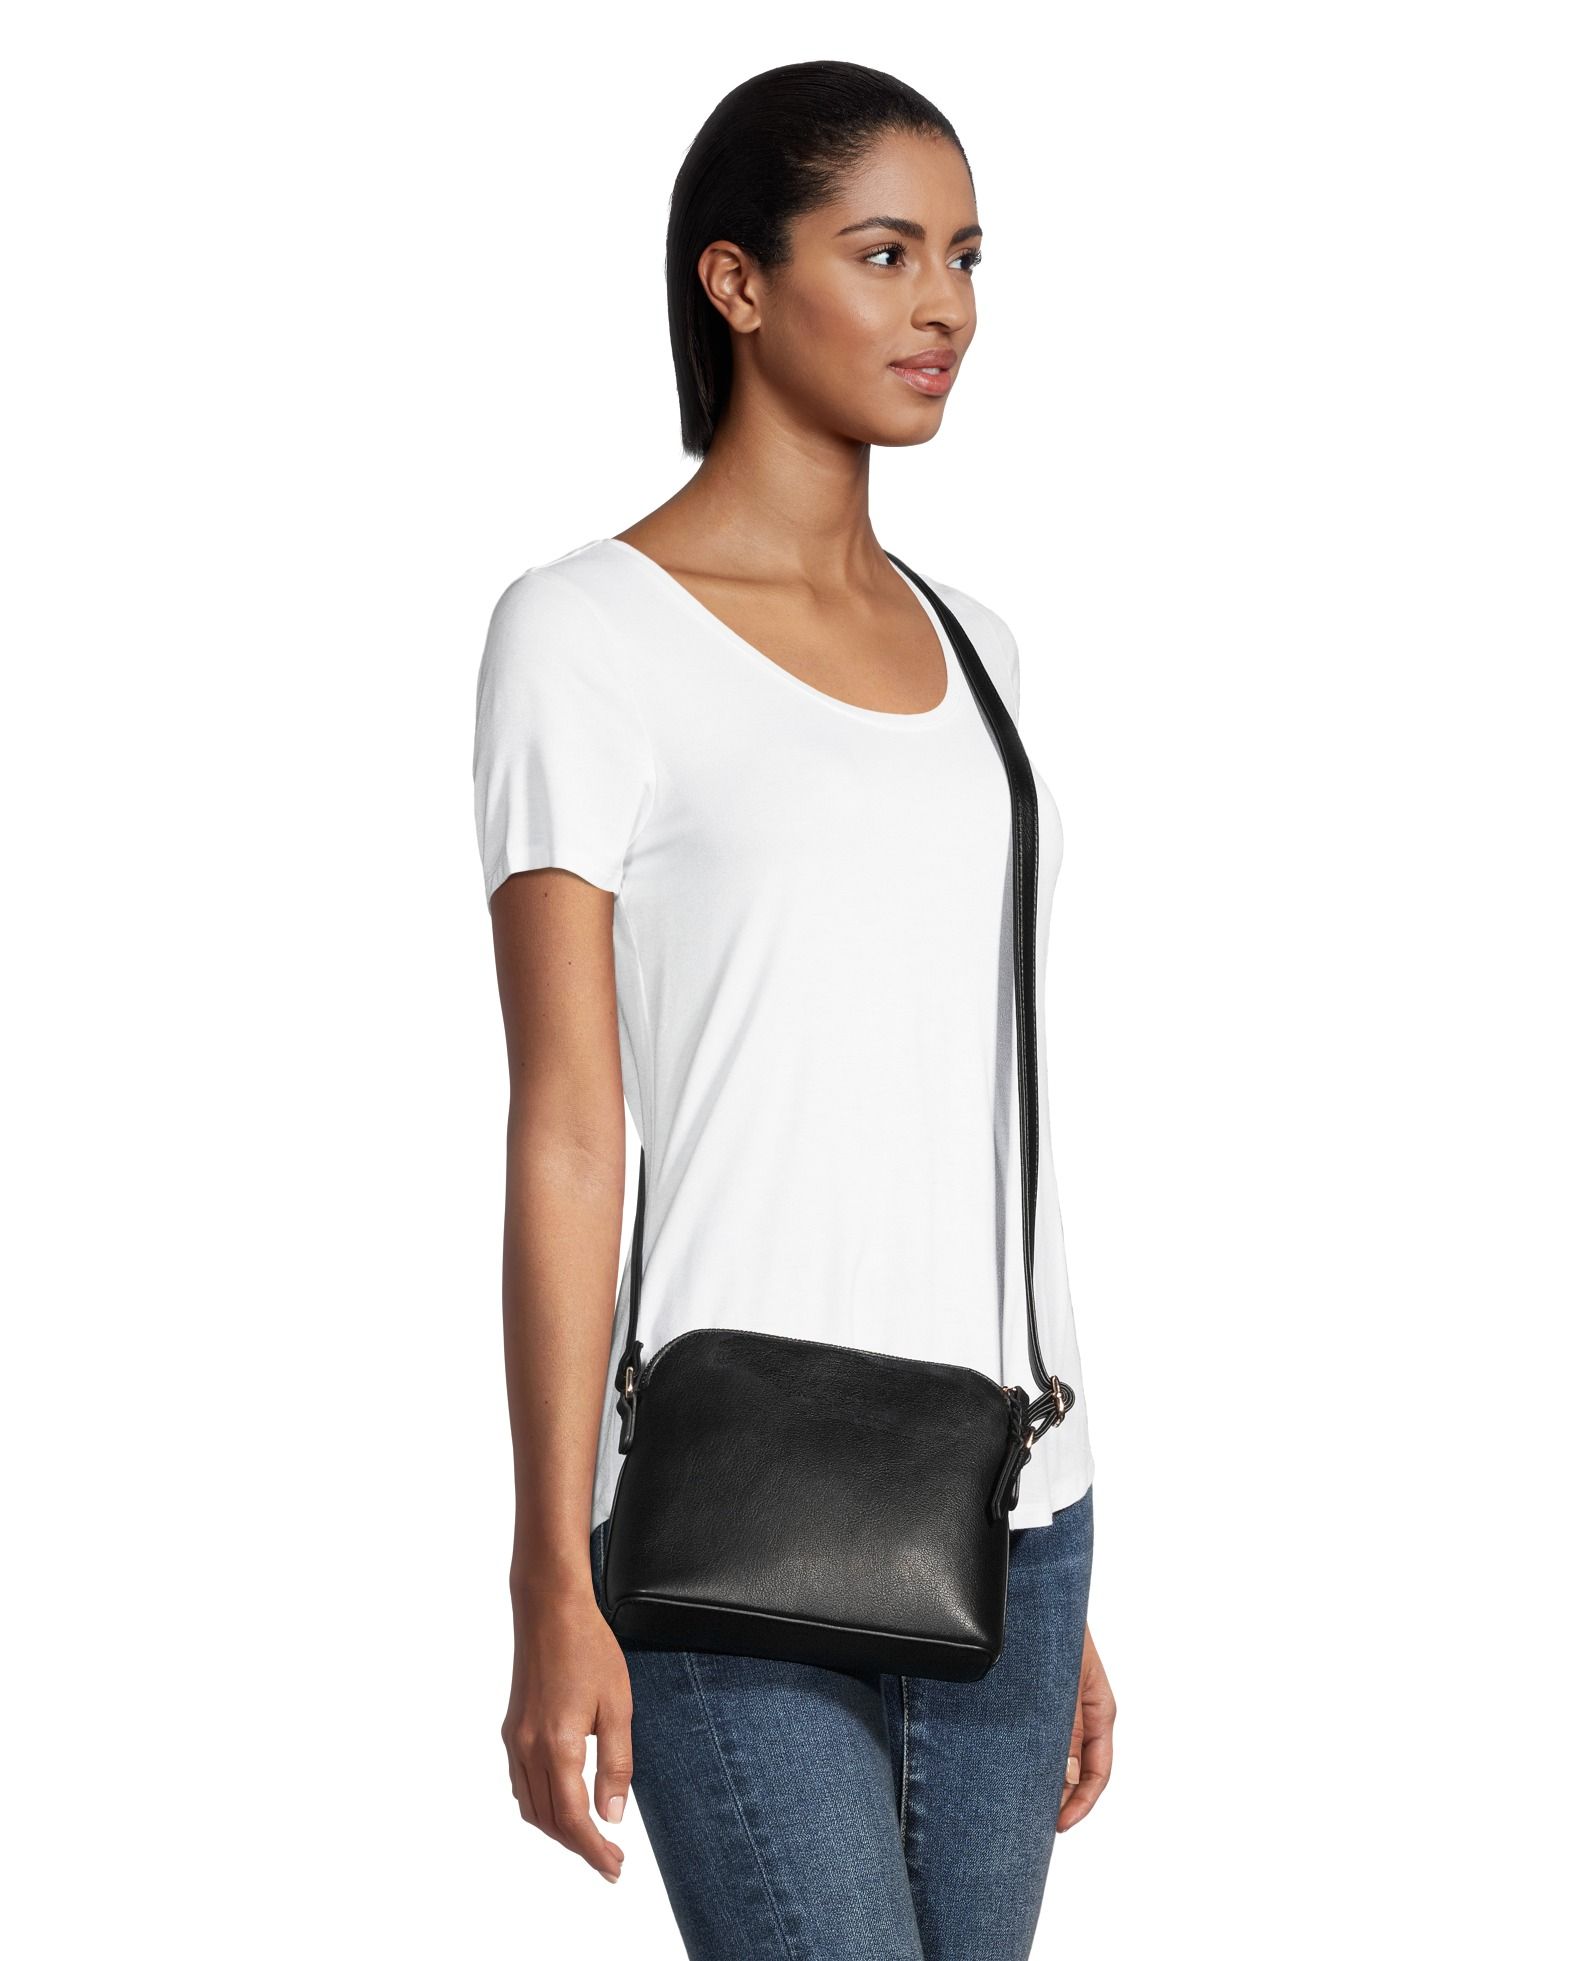 Denver Hayes Women's Front Zip Crossbody Bag With Adjustable Strap | Marks